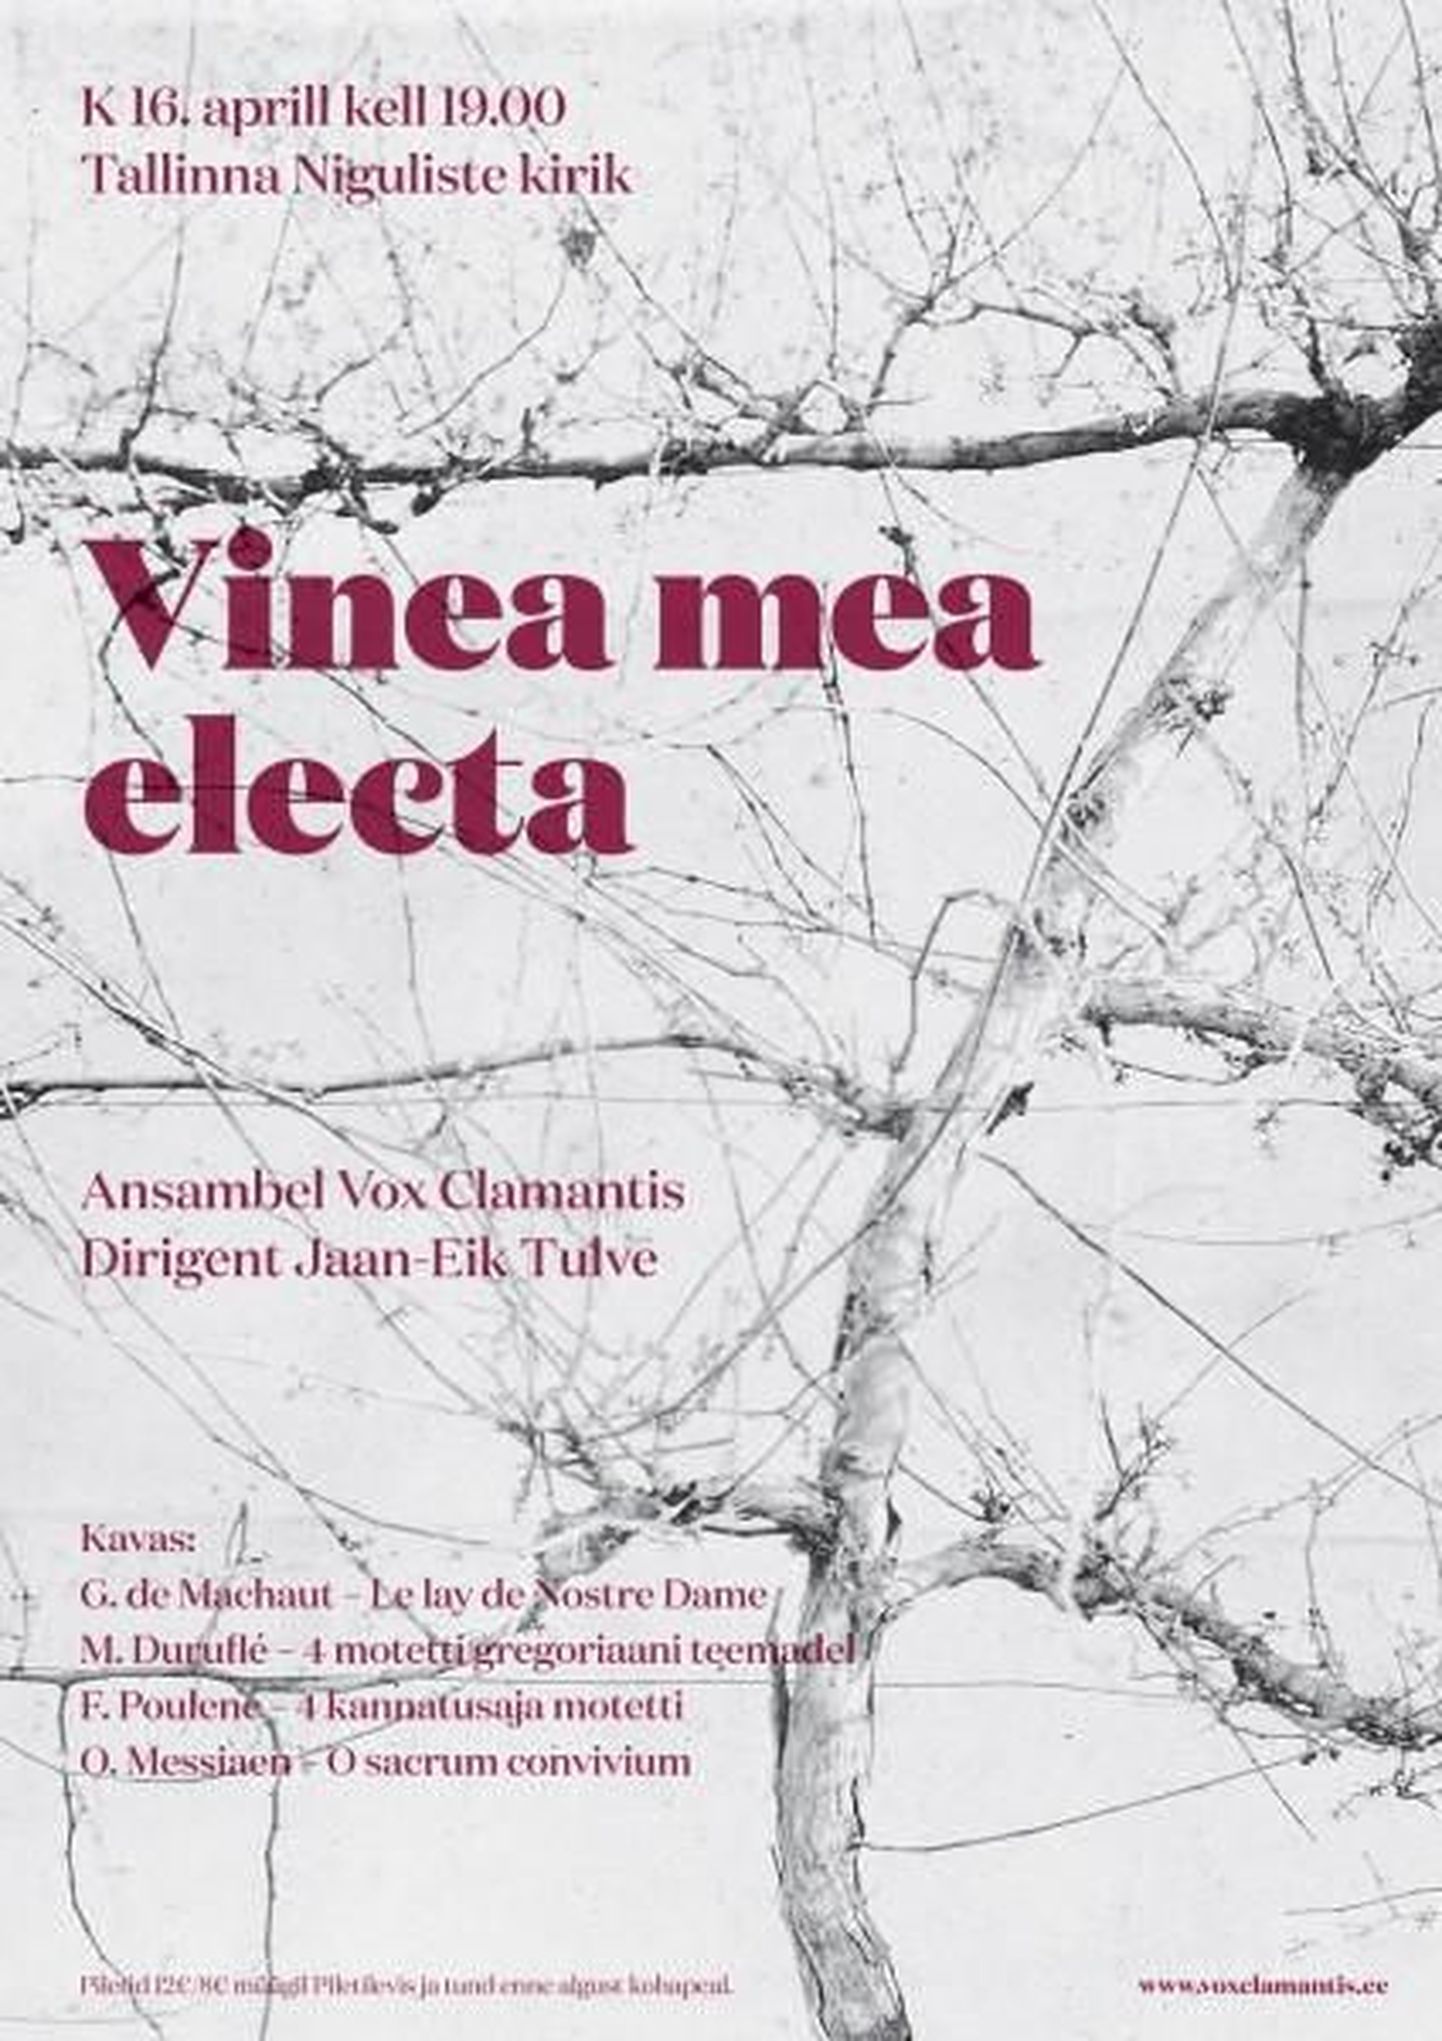 Vox Clamantis, dirigent Jaan-Eik Tulve - Vinea mea electa